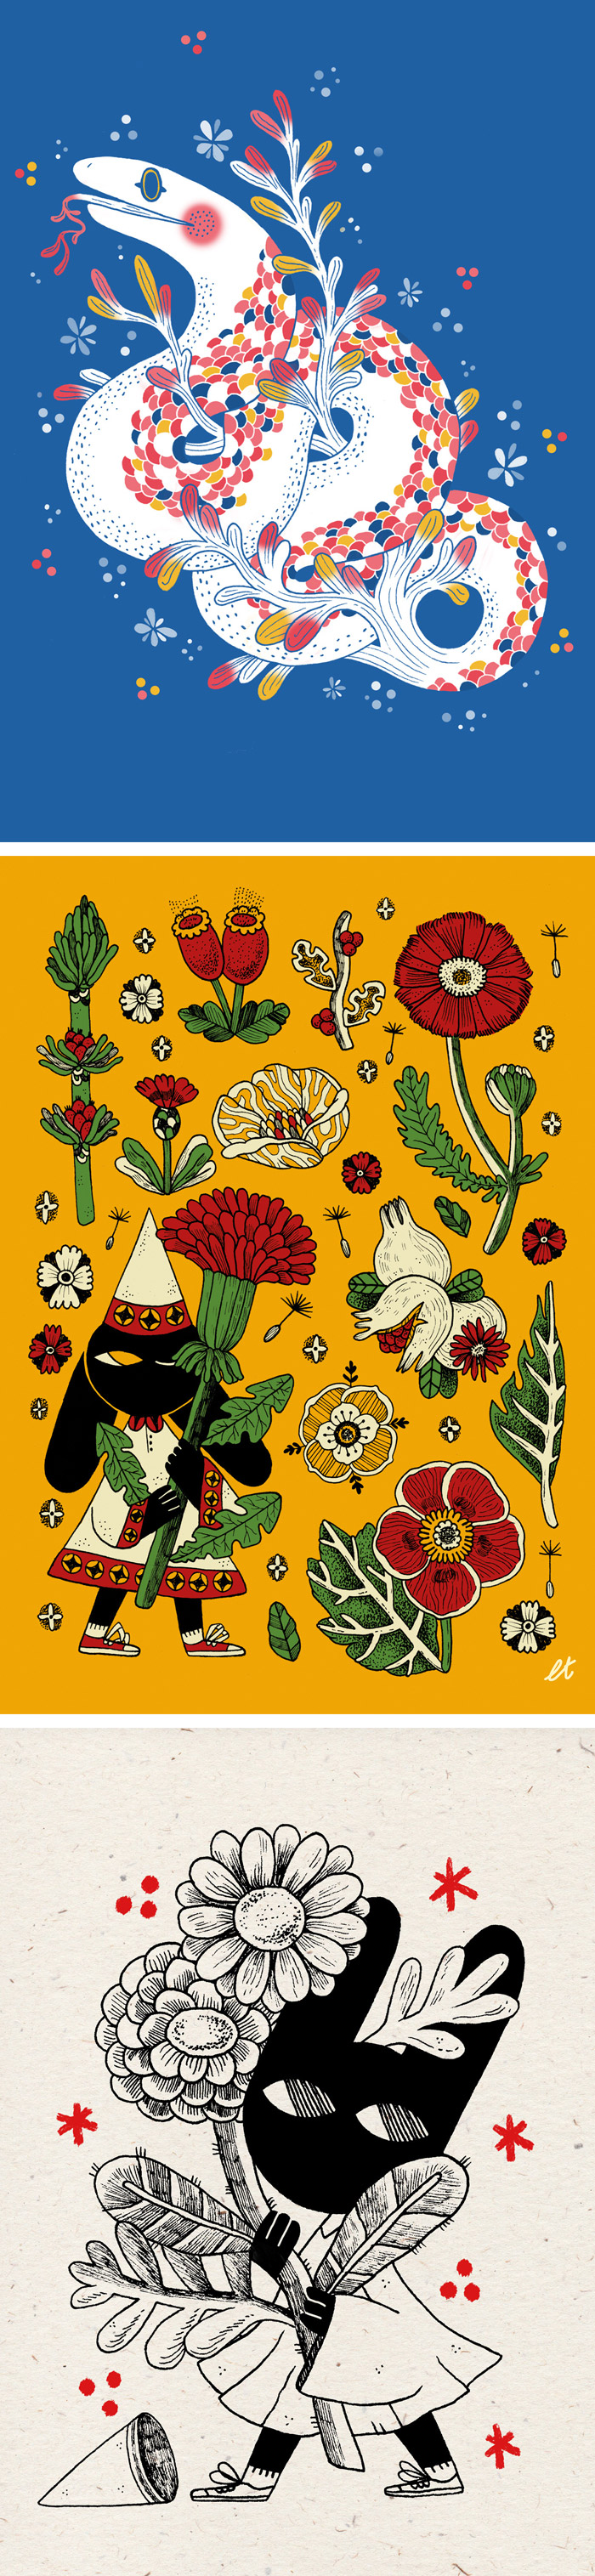 Folk art illustrations by Lia Tuia